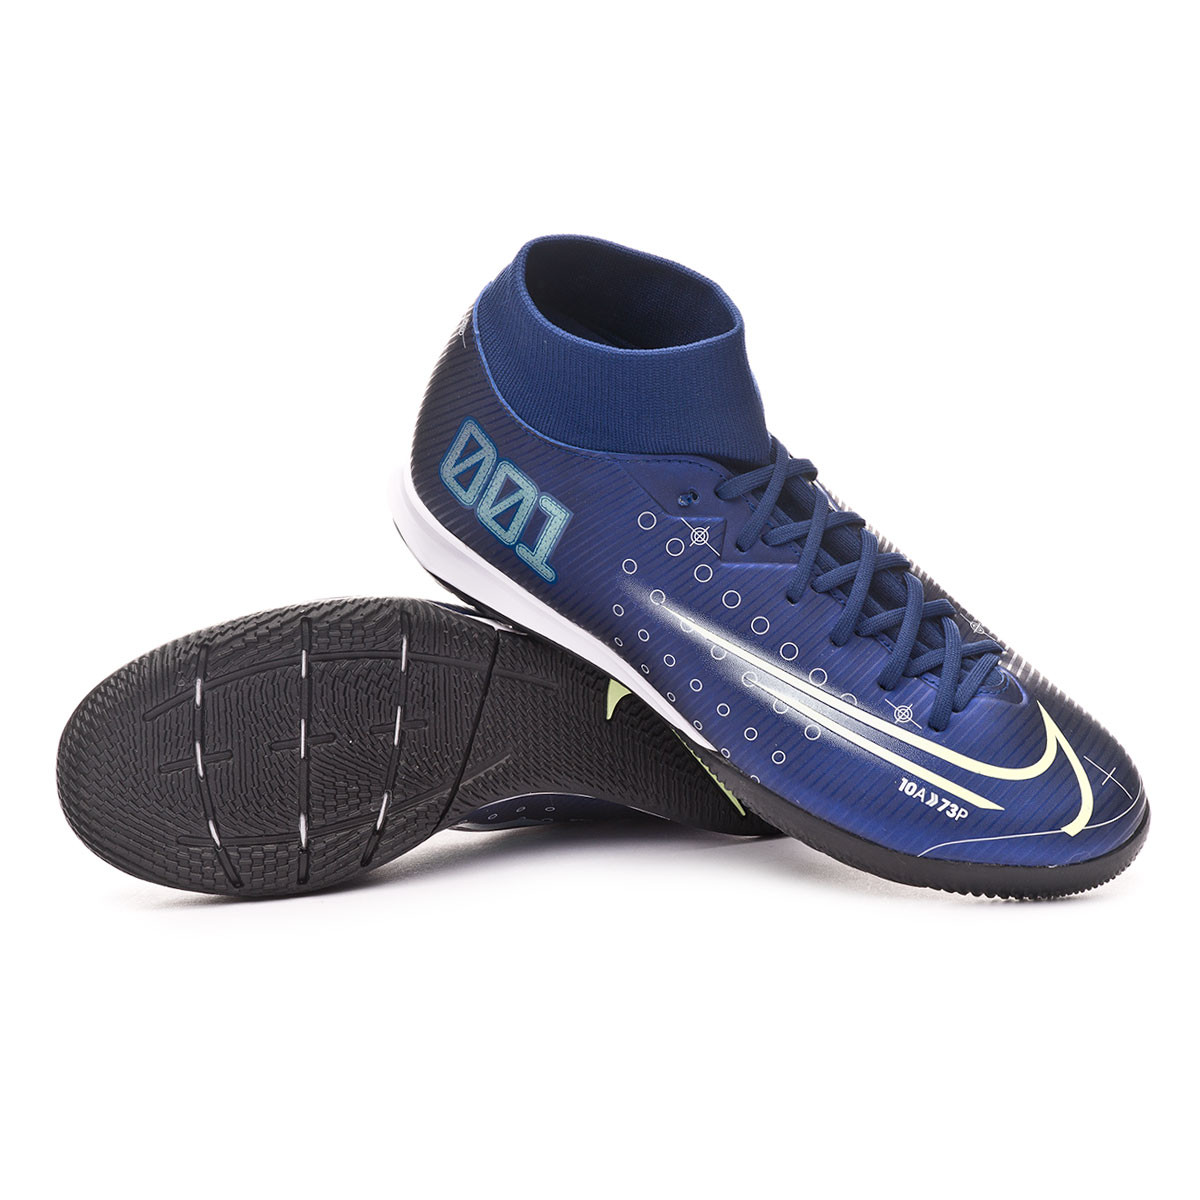 Mercurial SuperflyX Club Nike futsal boots Football. TodayPC